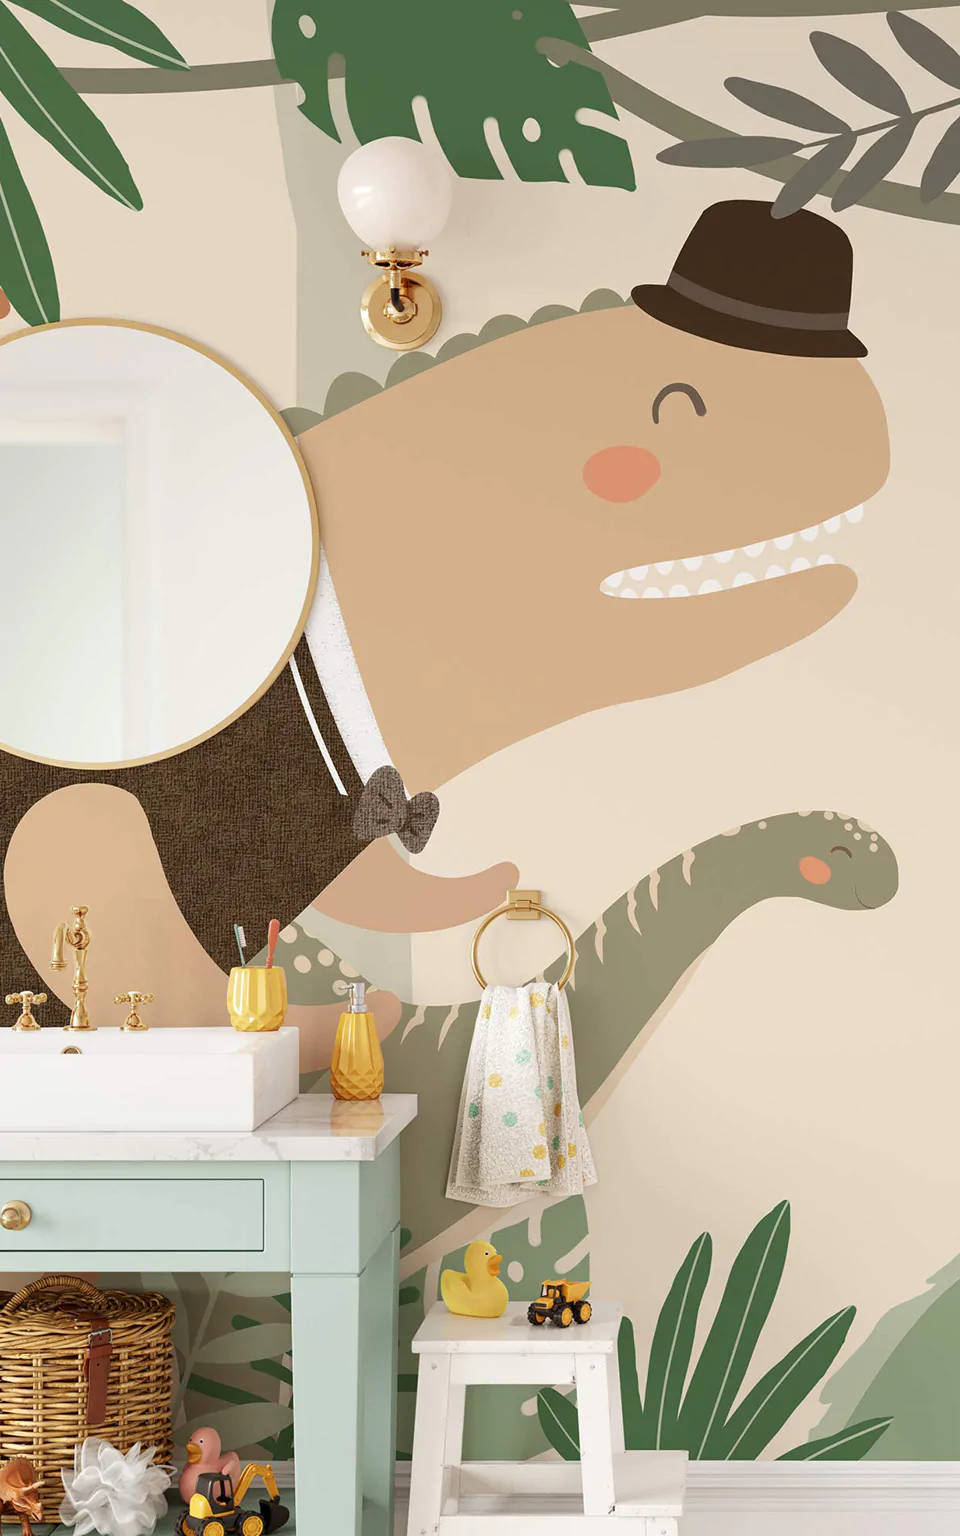 Cute Dinosaur Phone Bathroom Sticker